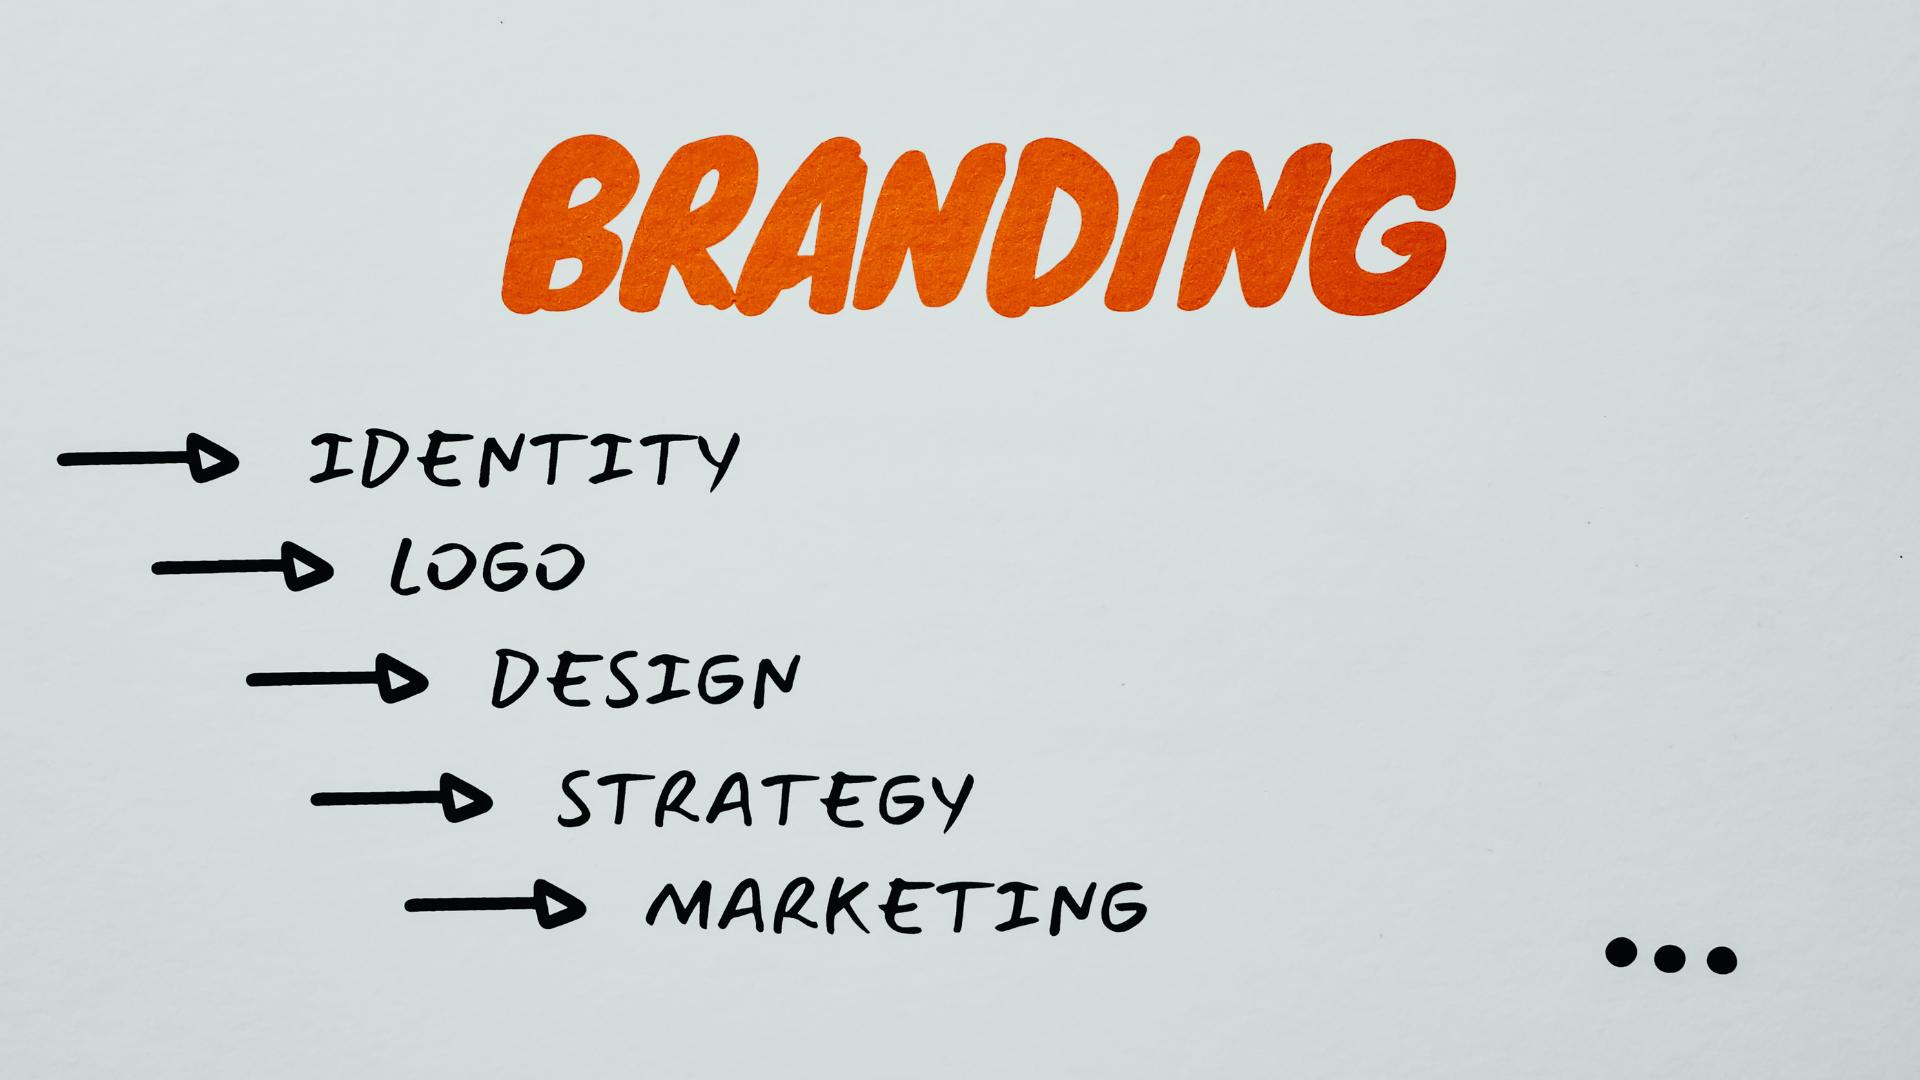 brief breakdown of different branding elements